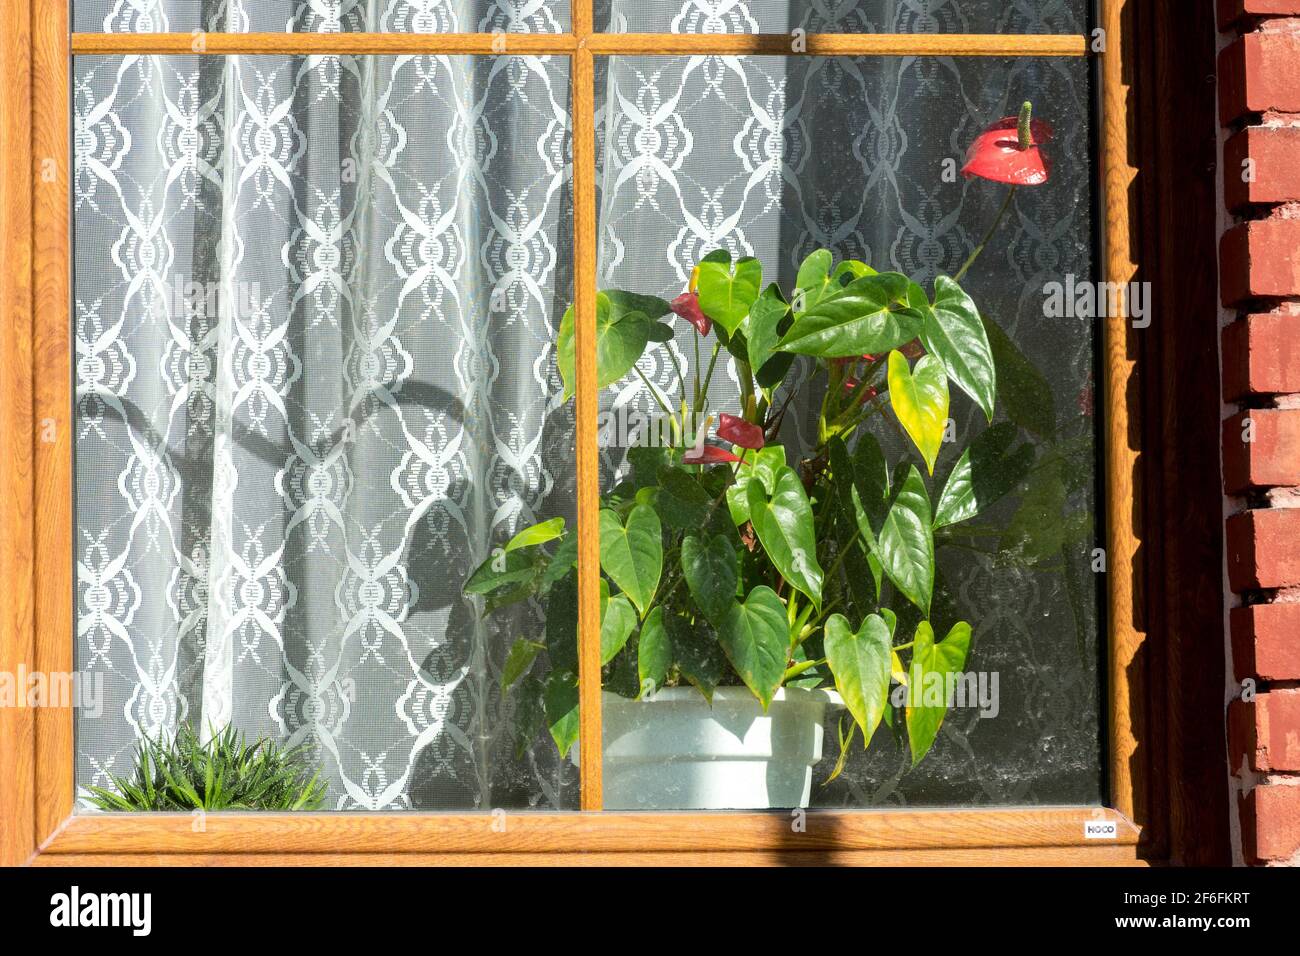 Anthurium casa planta en maceta en alféizar, cortina de ventana no persona Foto de stock